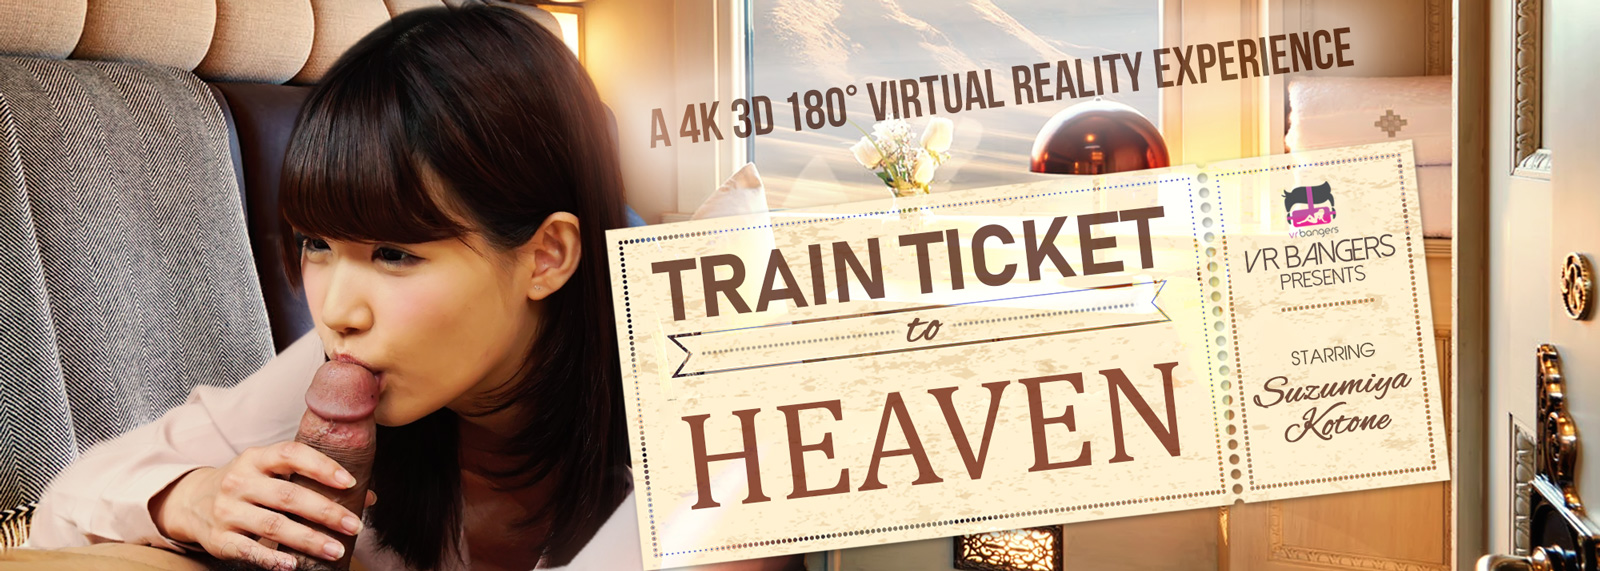 Train Ticket to Heaven - VR Porn Video, Starring: Suzumiya Kotone